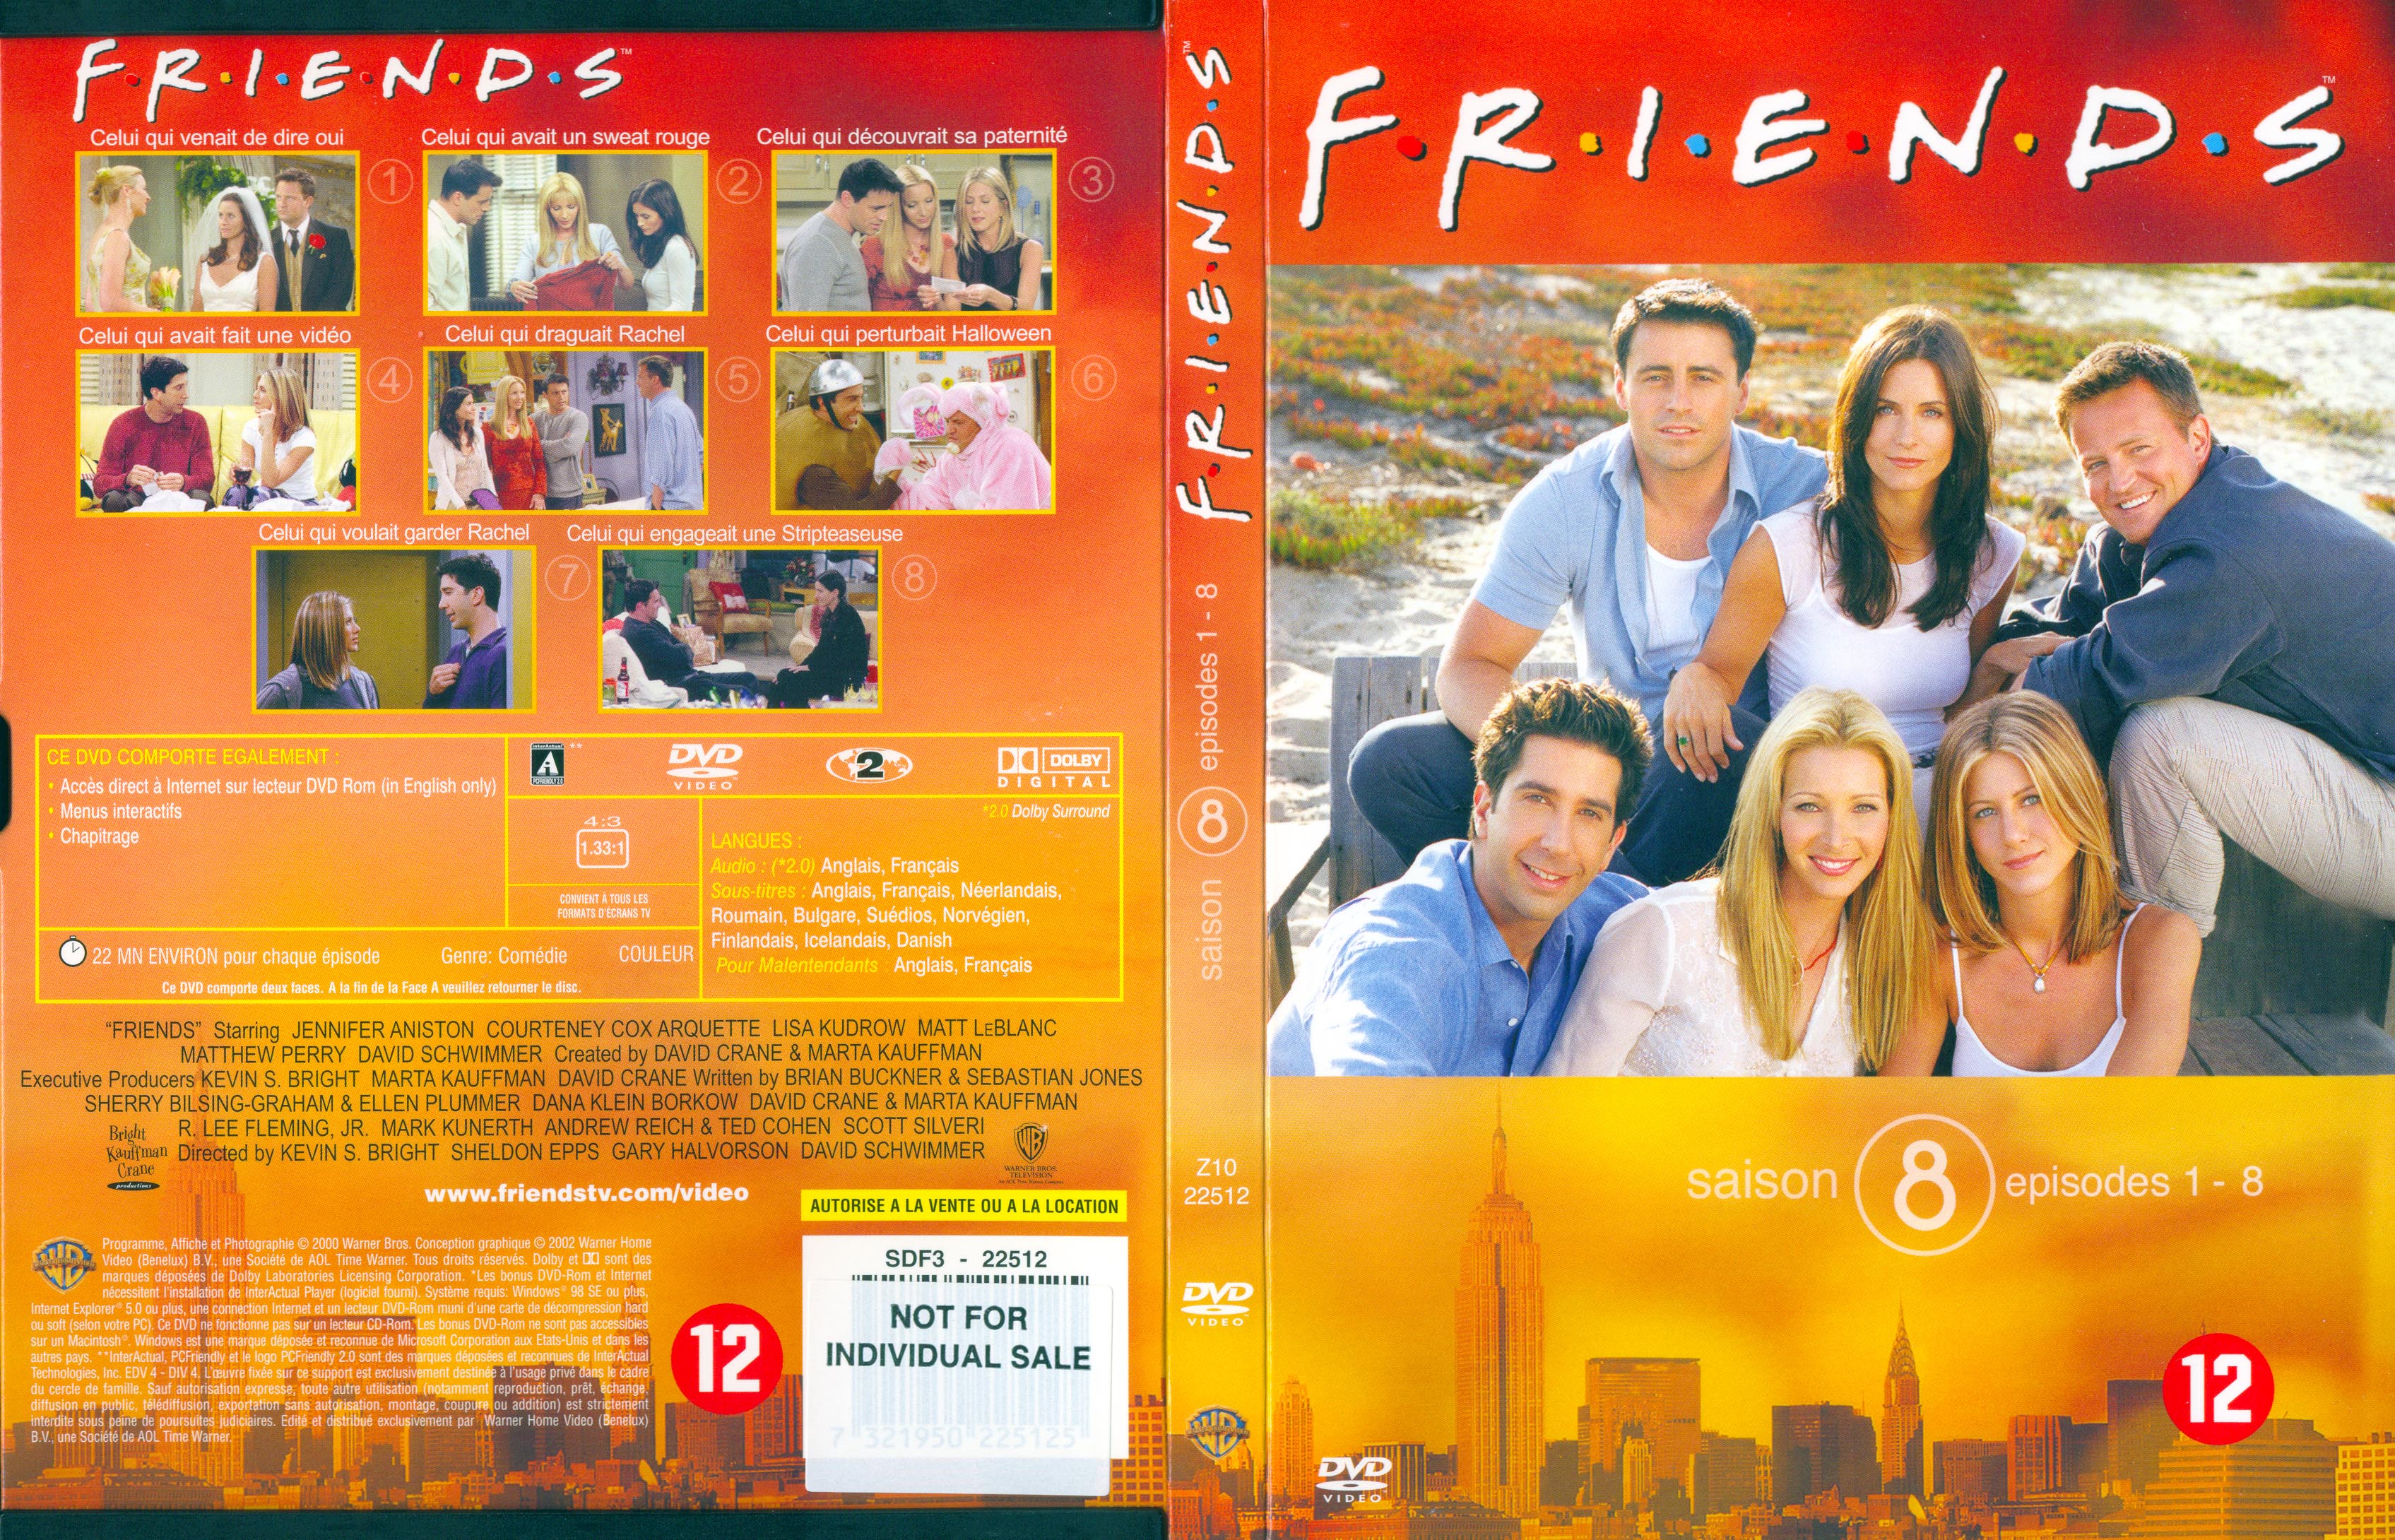 Jaquette DVD Friends saison 8 dvd 1